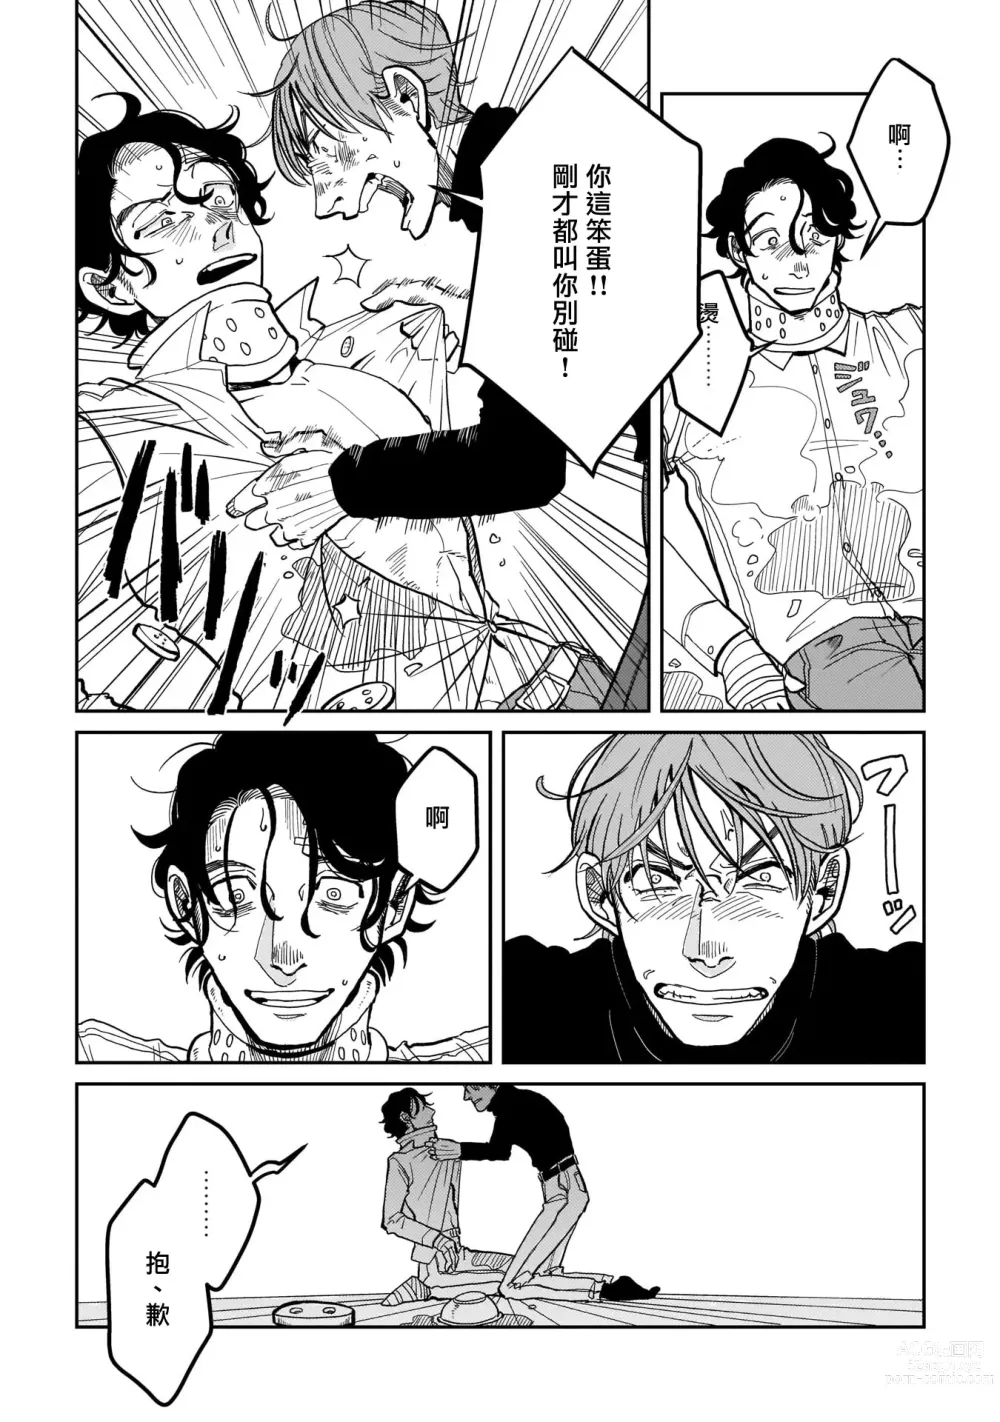 Page 24 of manga 无论疾病、还是健康 #4-6 + P站番外插图 + 番外合集1-7